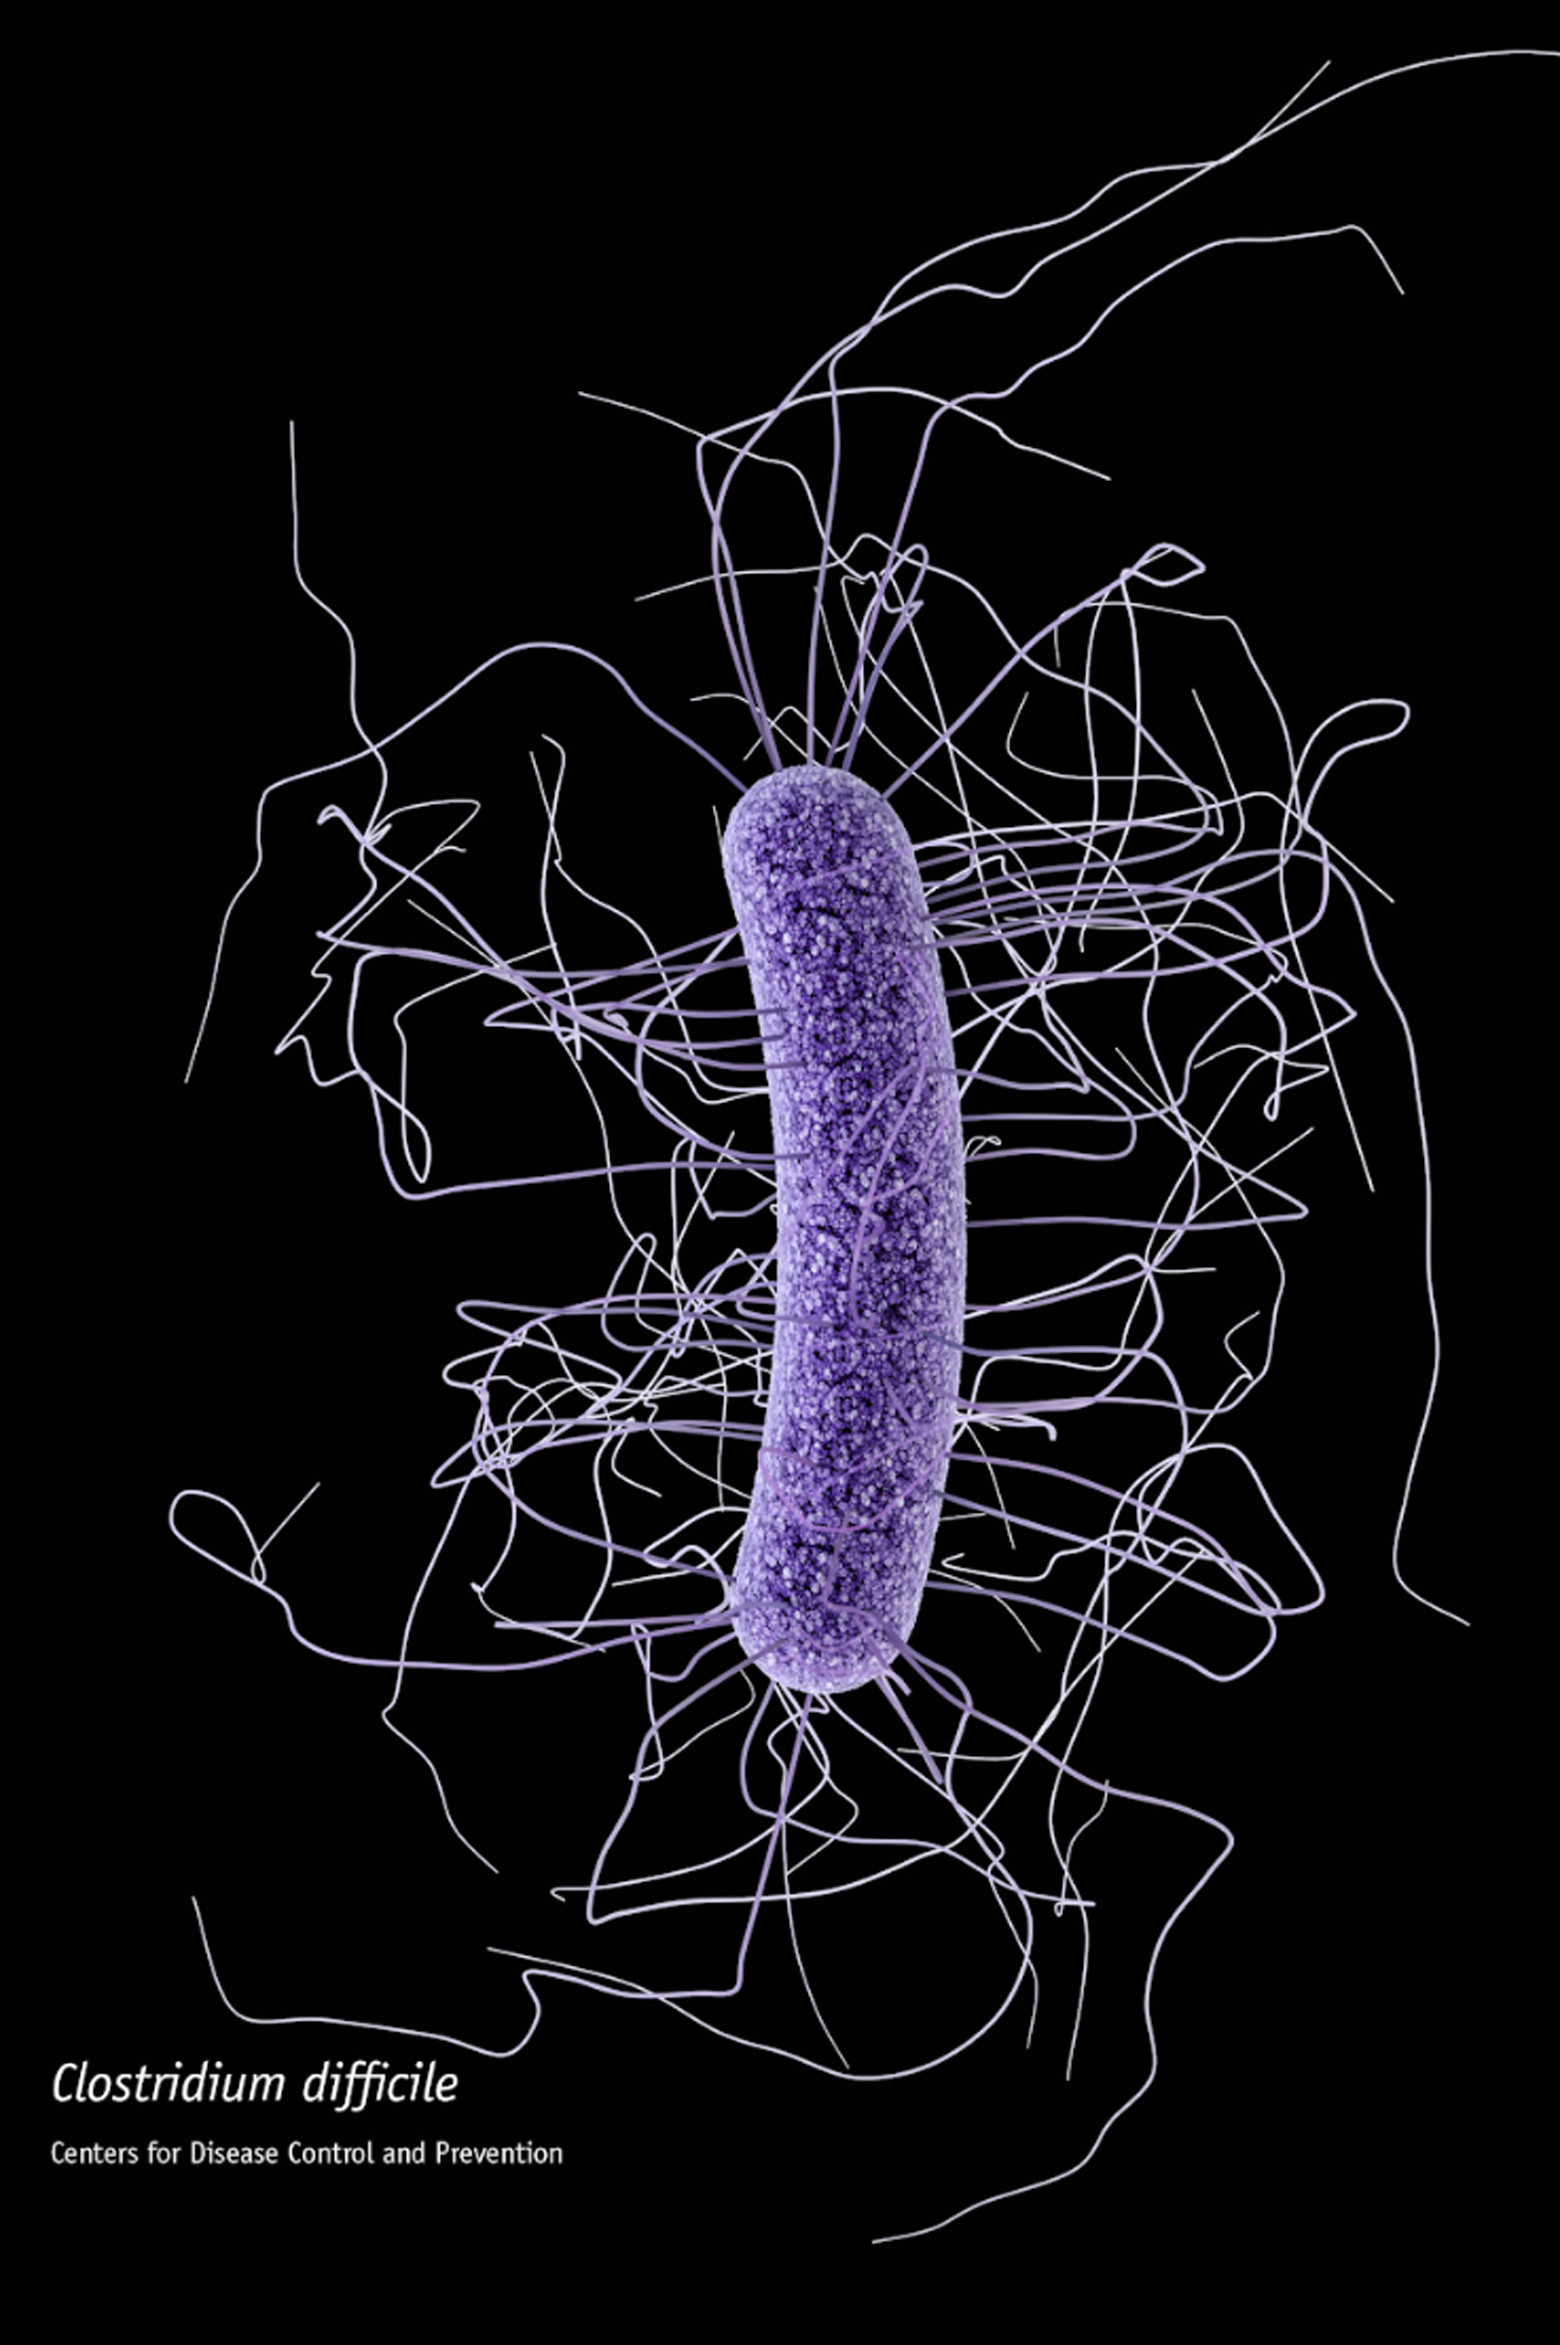 An illustration of a single clostridium difficile bacterium